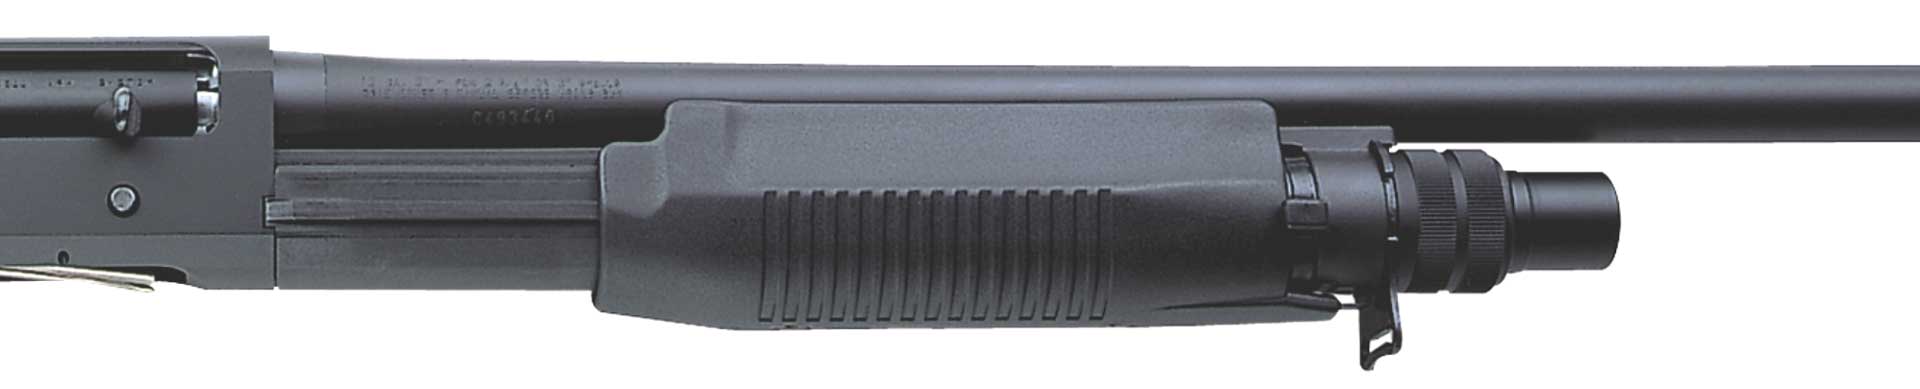 right side black shotgun plastic metal benelli gun fore-end parts closeup sling attachment barrel action receiver